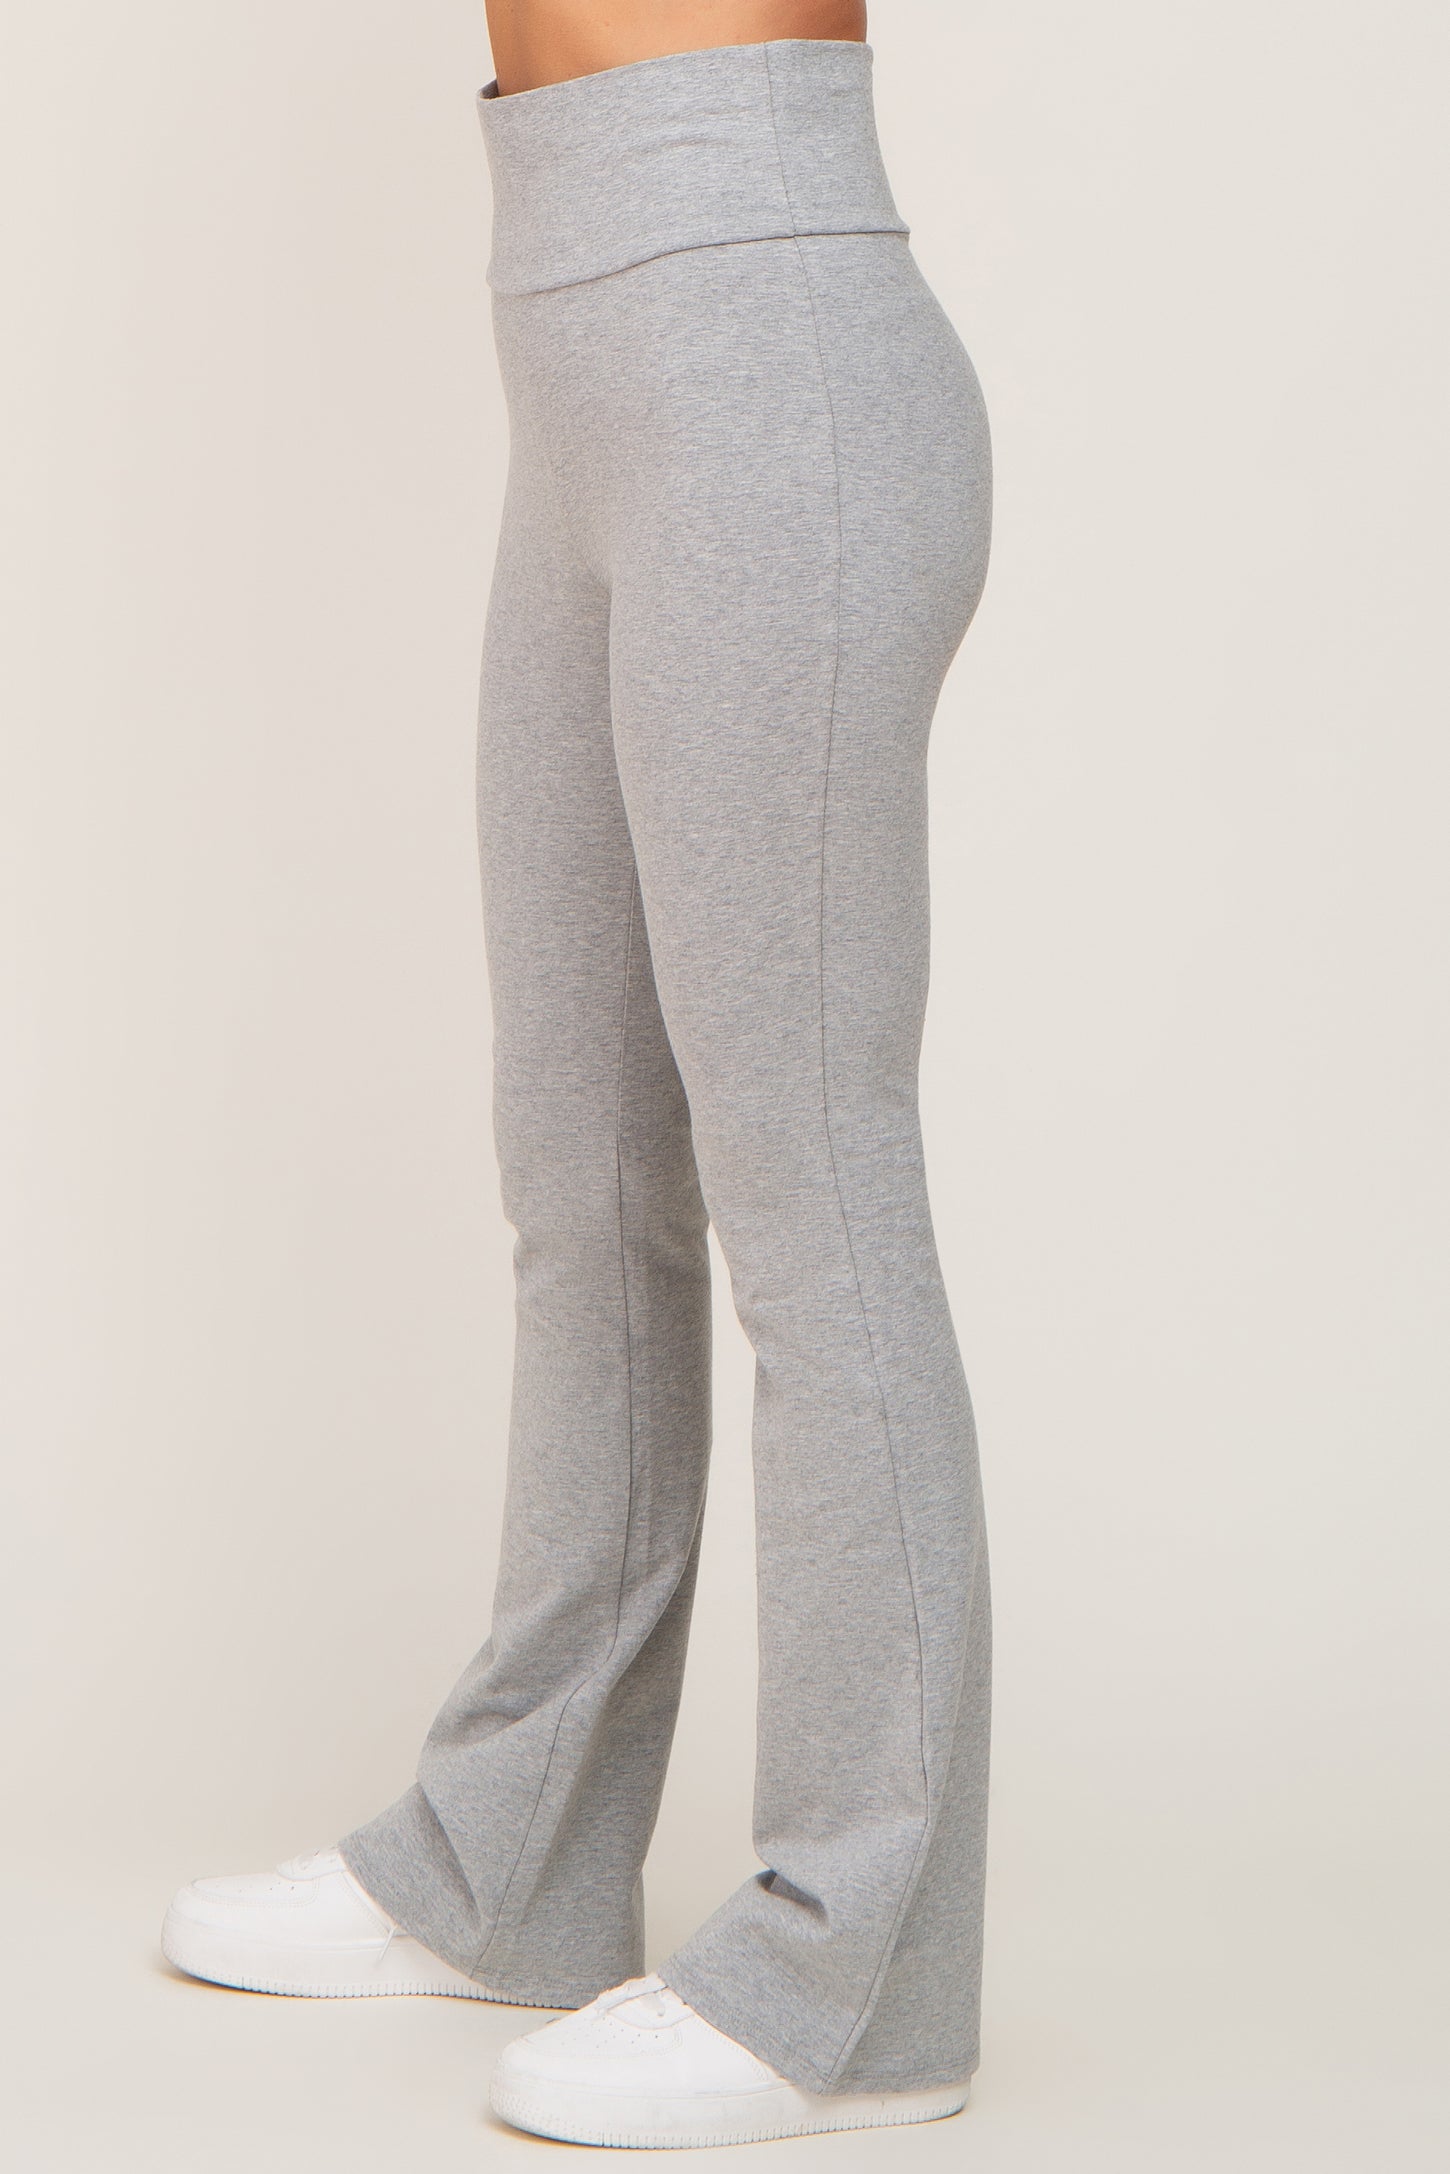 ZHAGHMIN Grey Flare Leggings Womens Length Full Casual Pants Flare